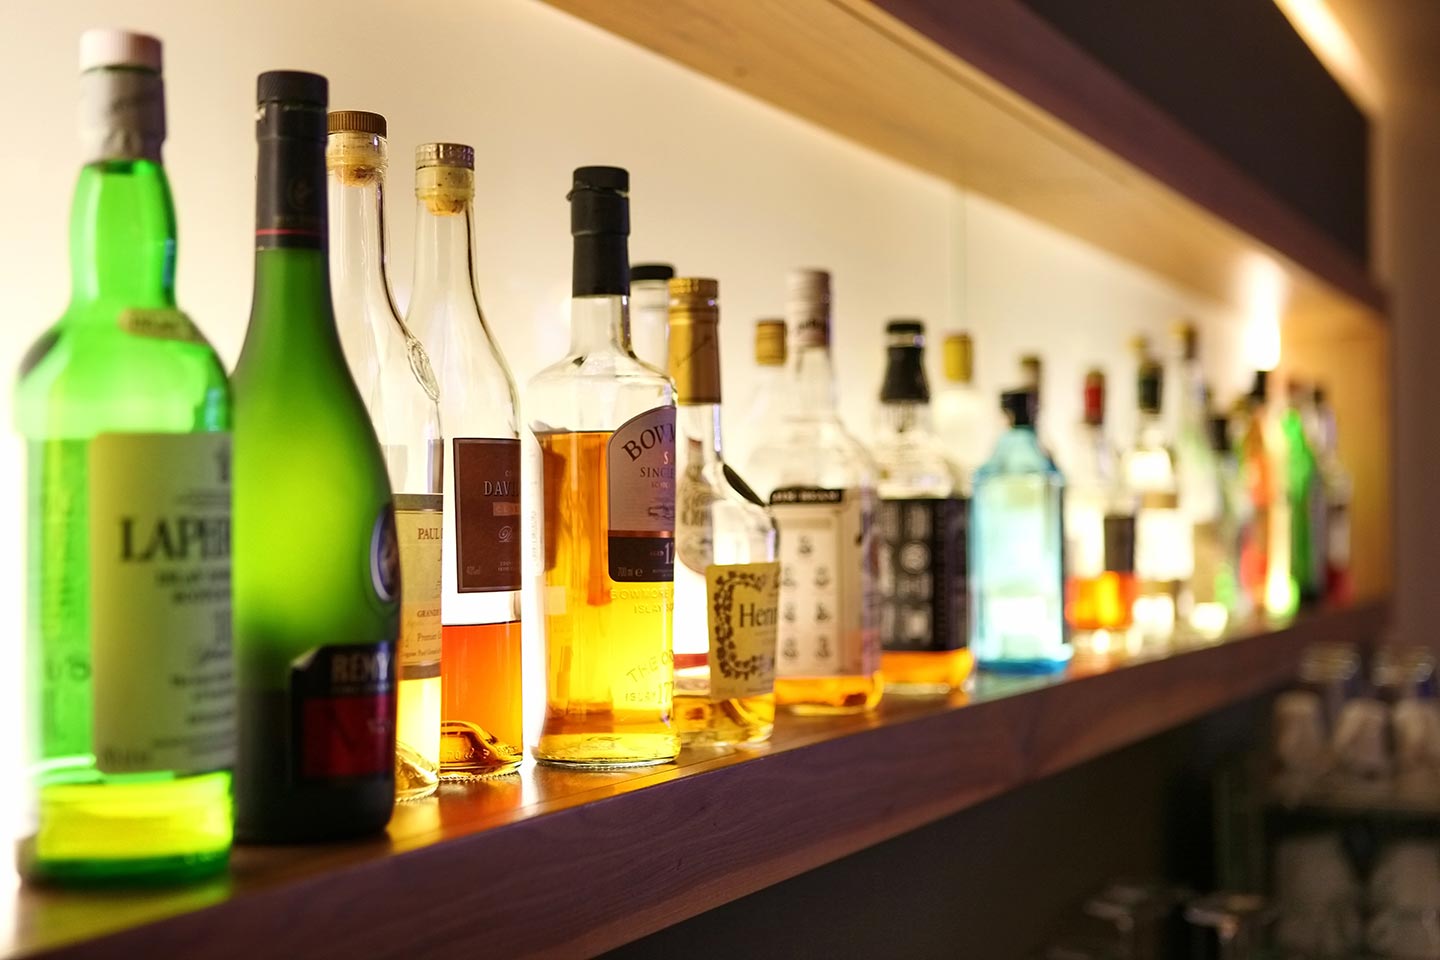 bottles in a bar